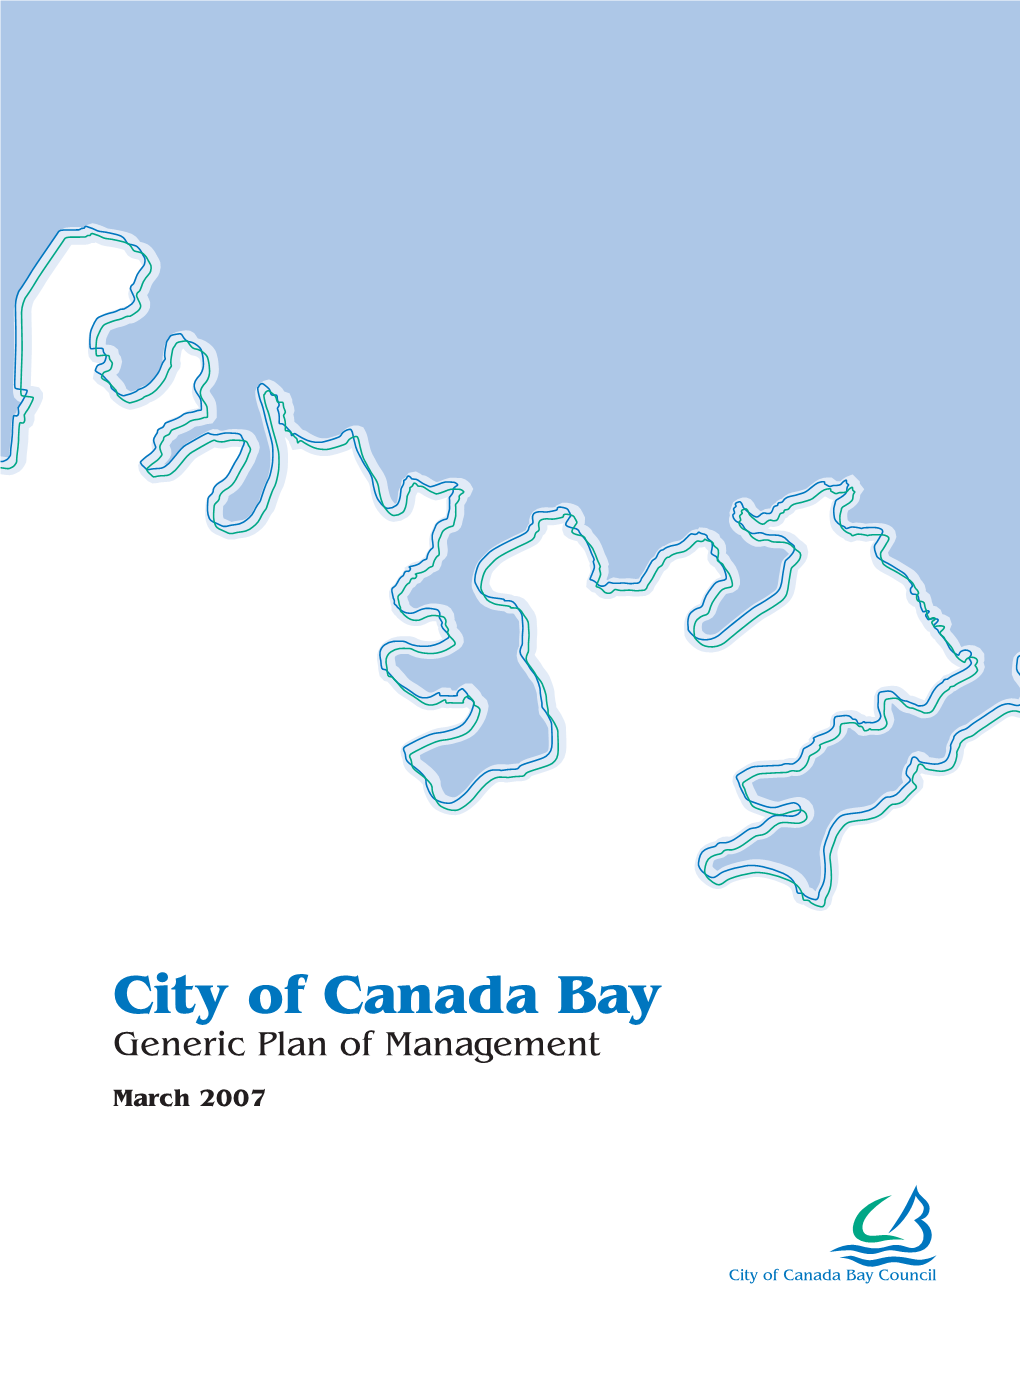 City of Canada Bay Council, 2003)